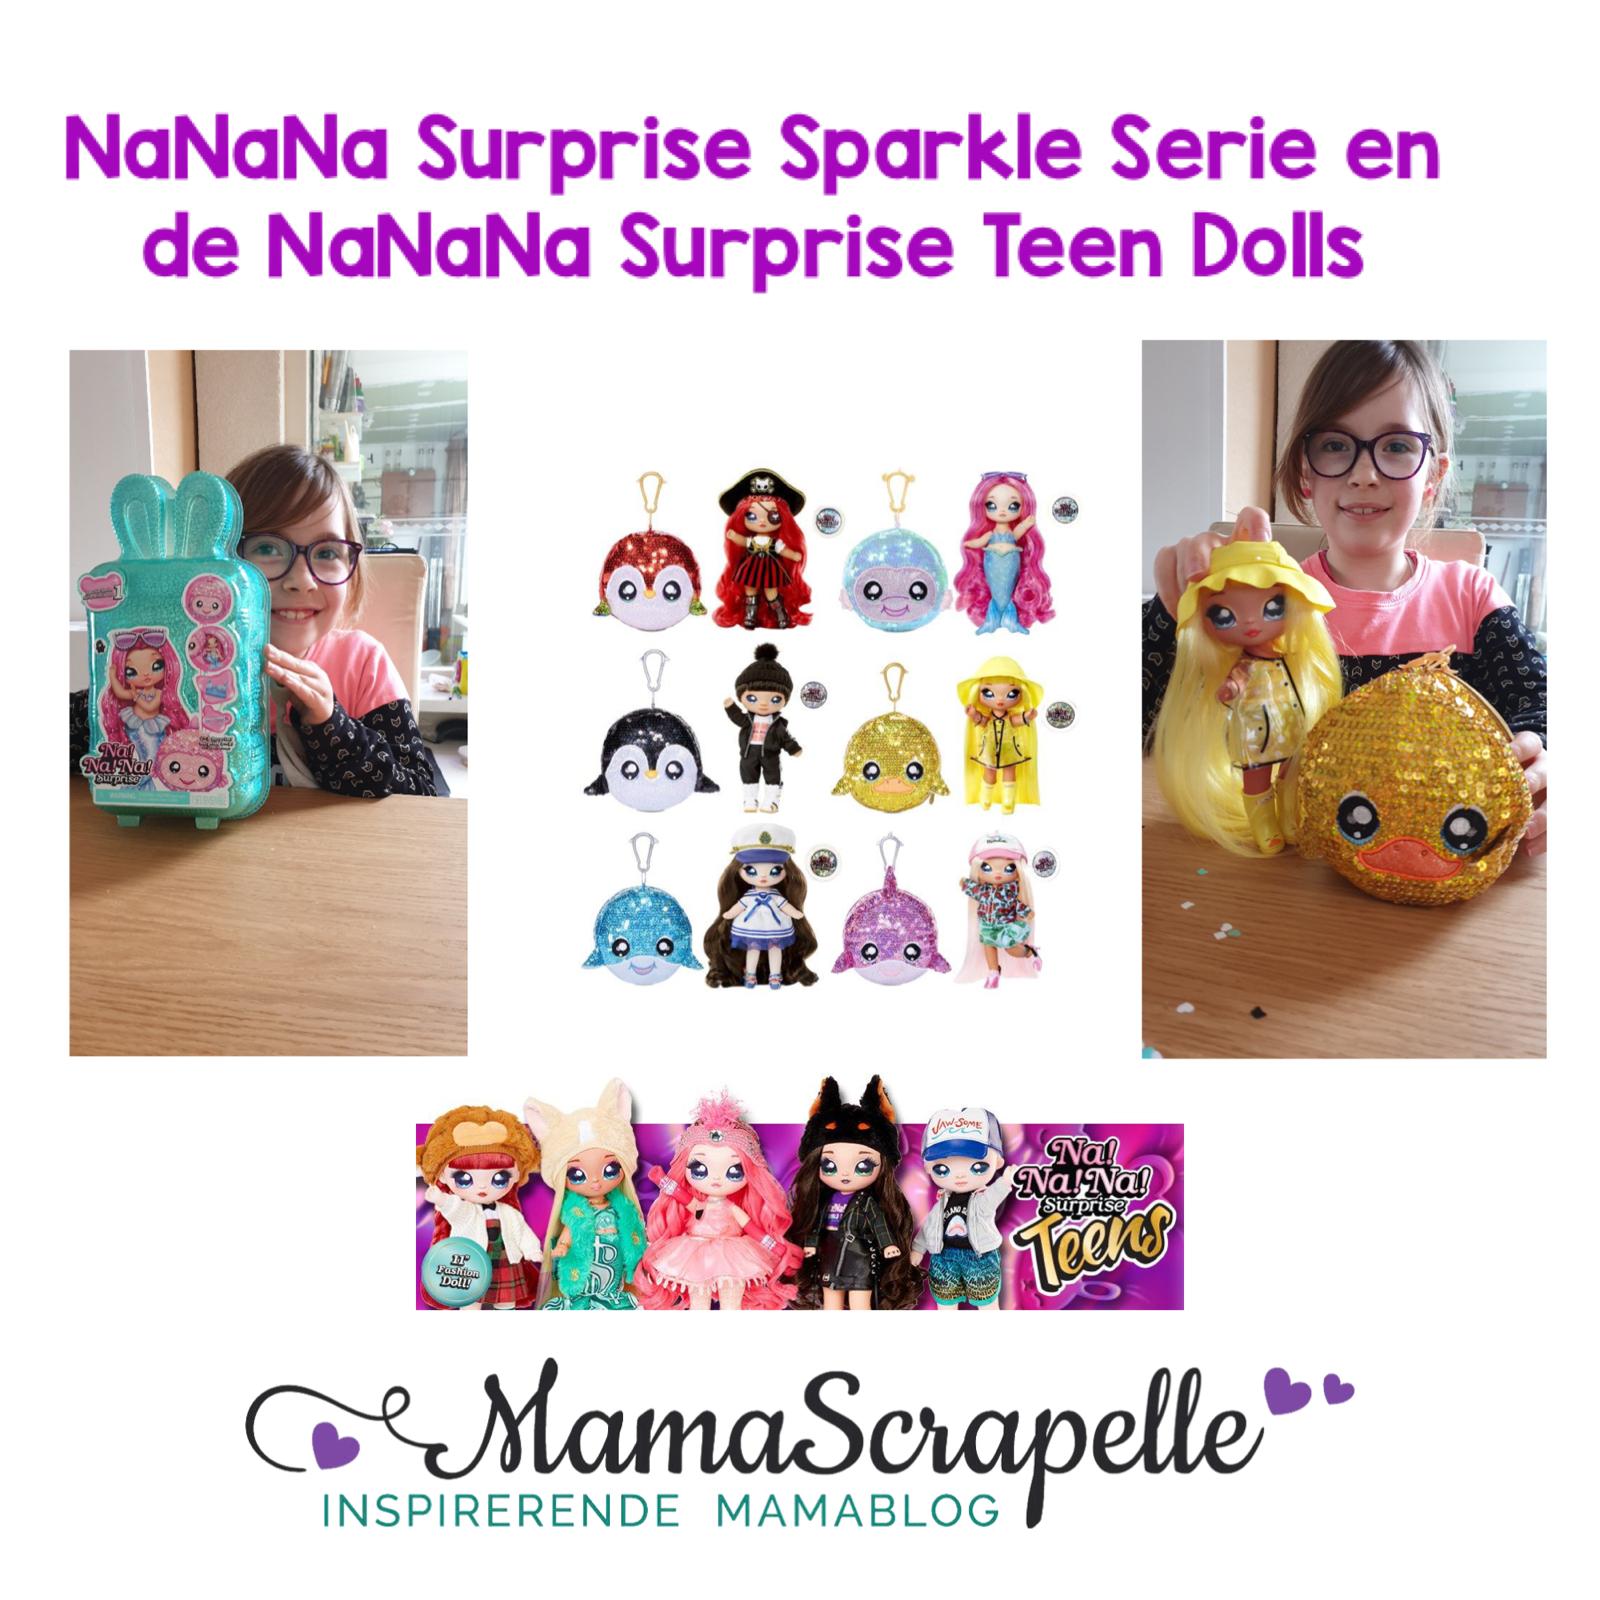 NaNaNa Surprise Sparkle Serie